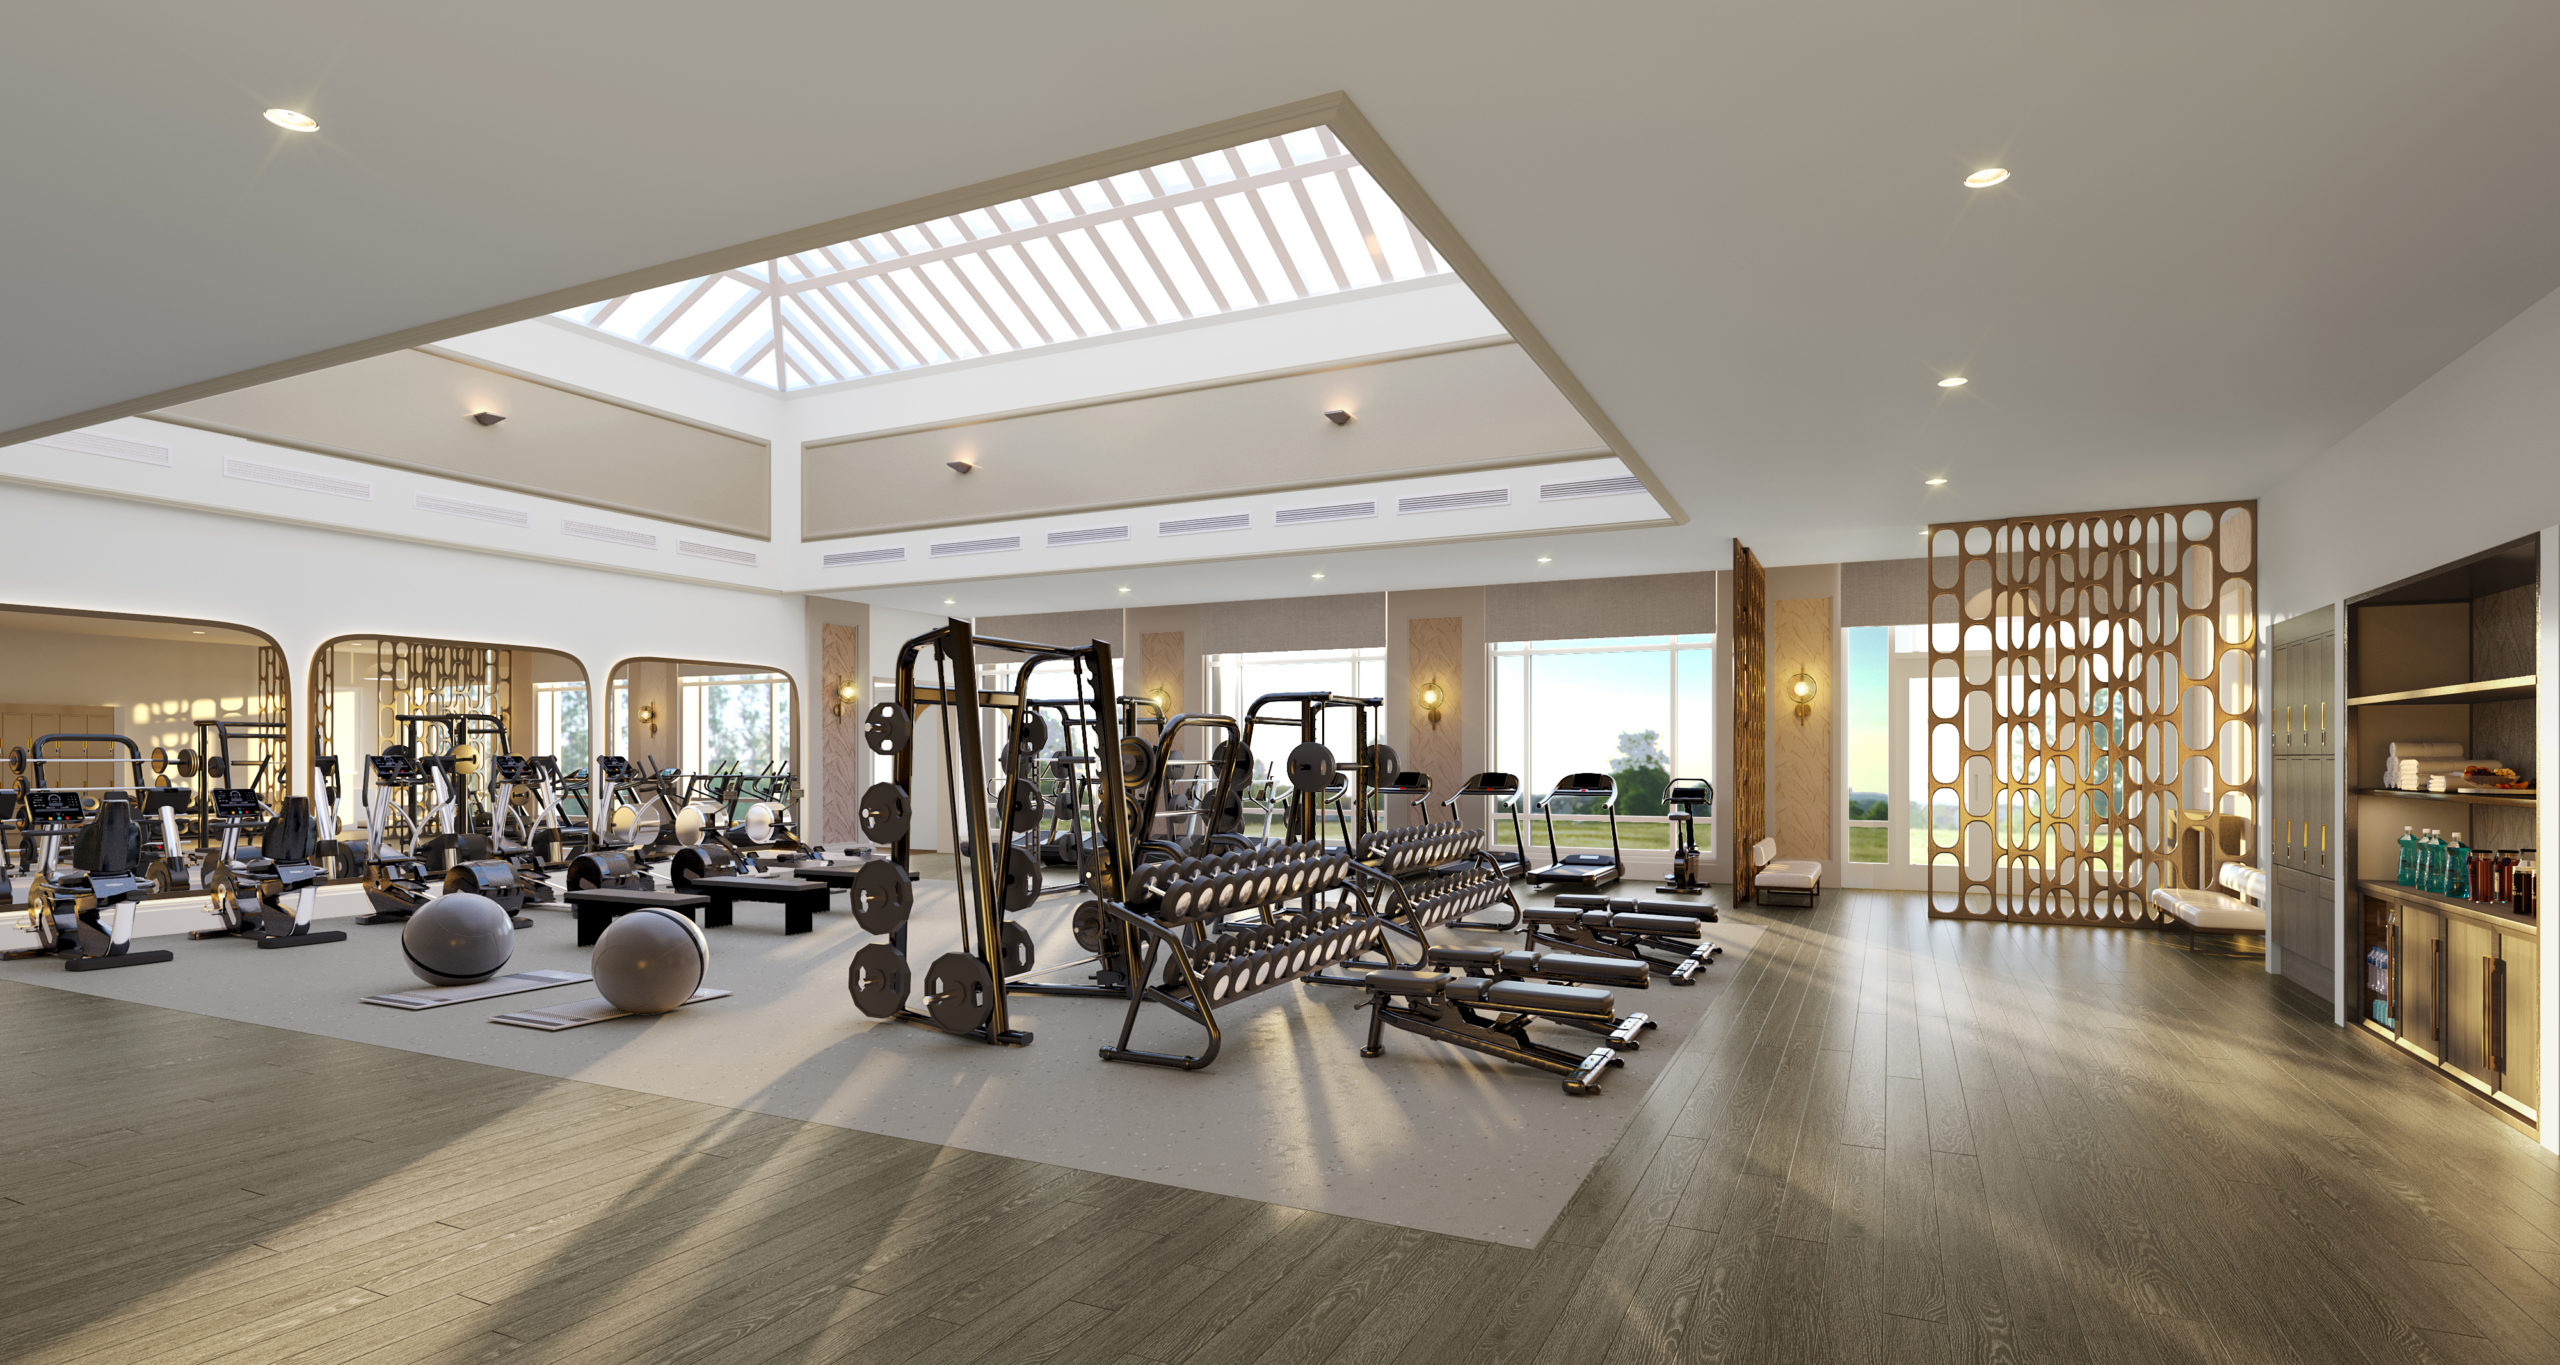 The Ritz-Carlton, Amelia Island Fitness and Wellness